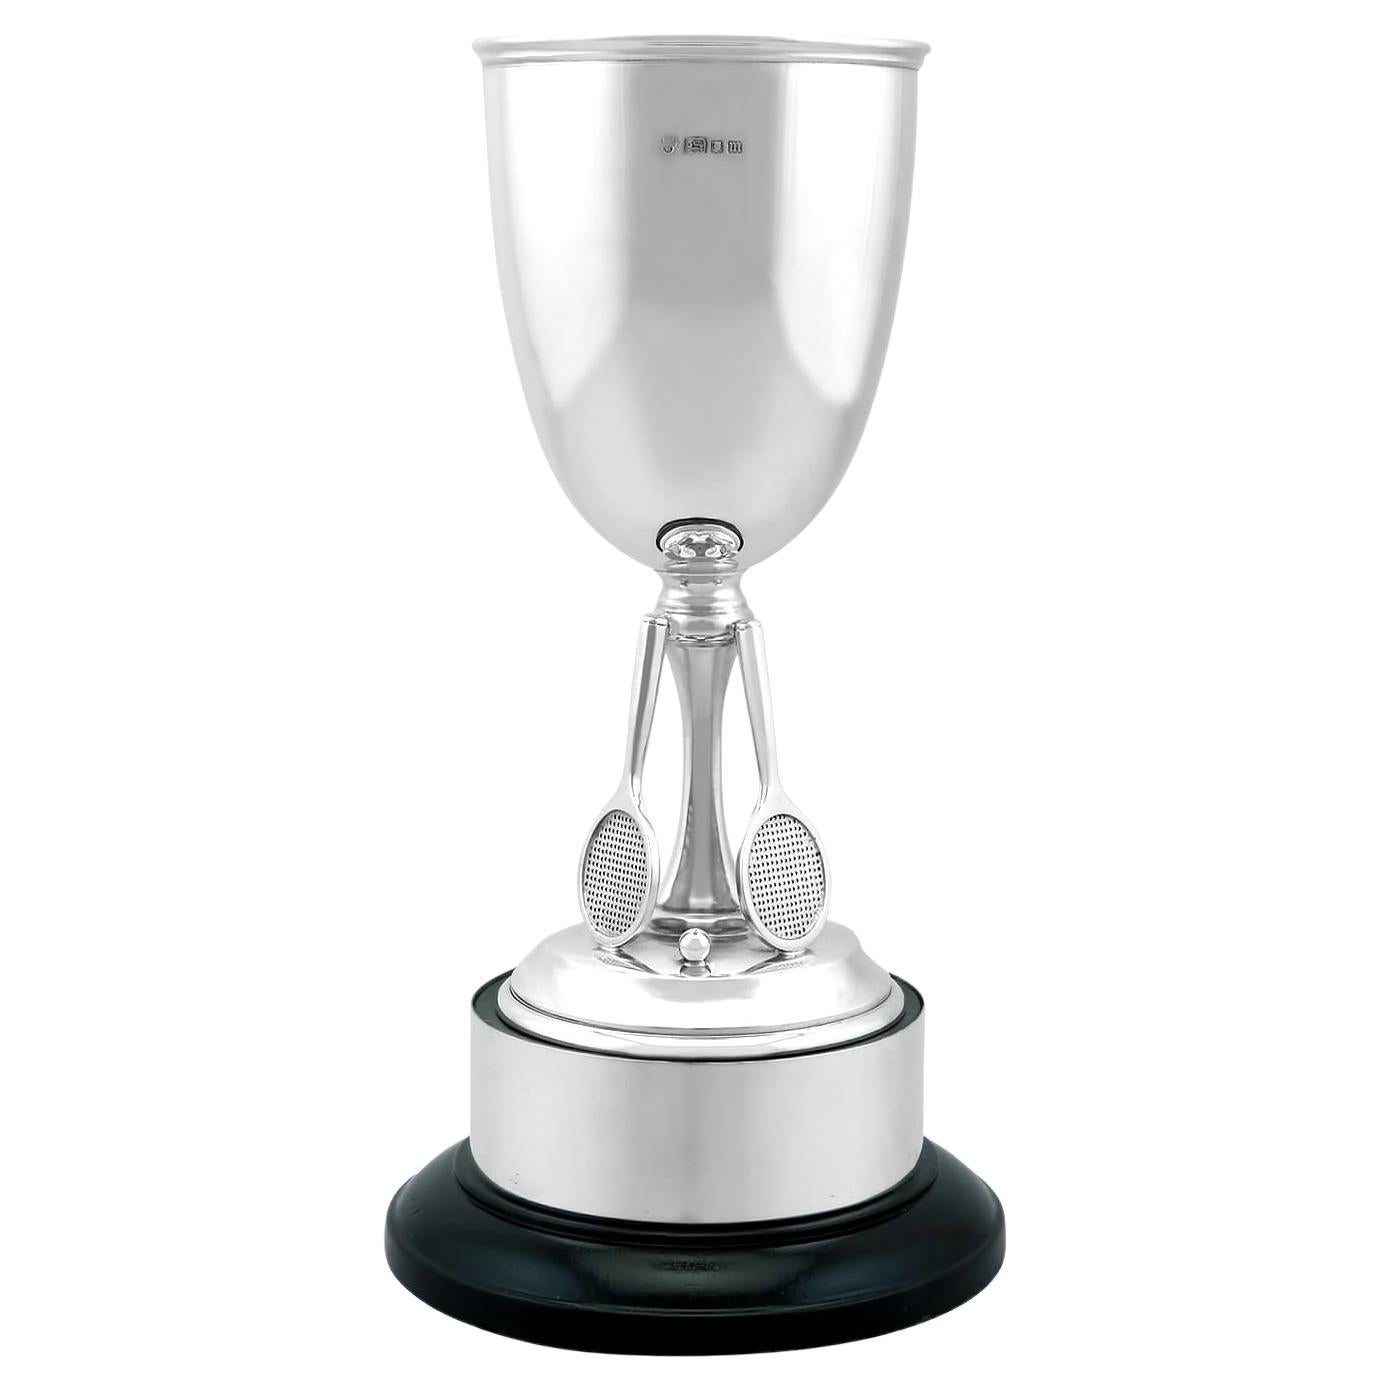 Antique Sterling Silver Presentation Tennis Trophy